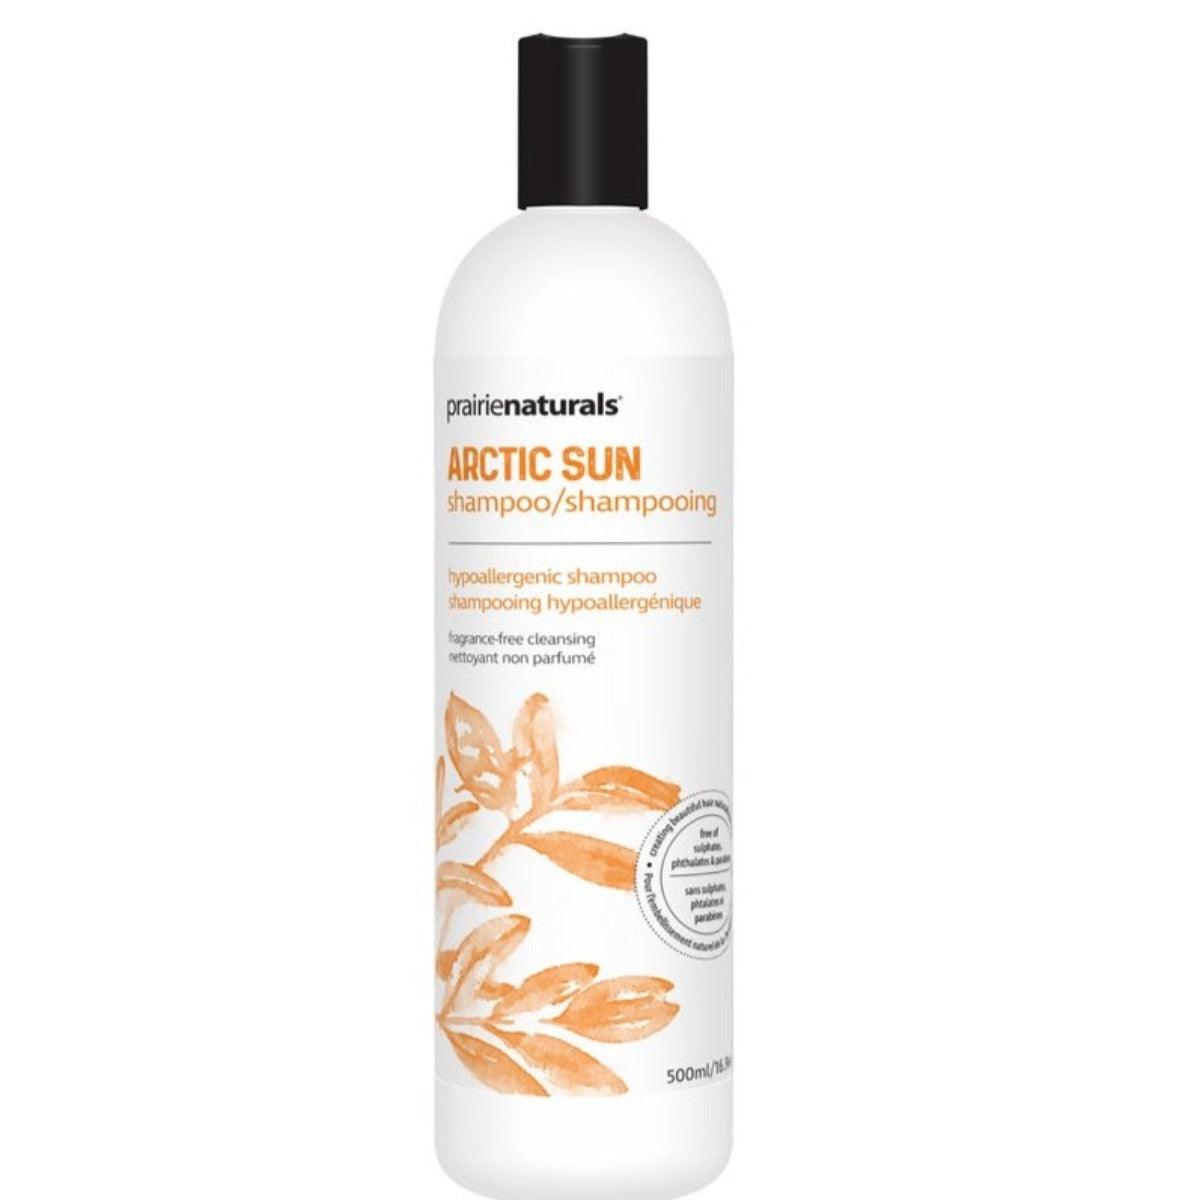 Prairie Naturals Arctic Sun Hypoallergic Shampoo 500ML Shampoo at Village Vitamin Store